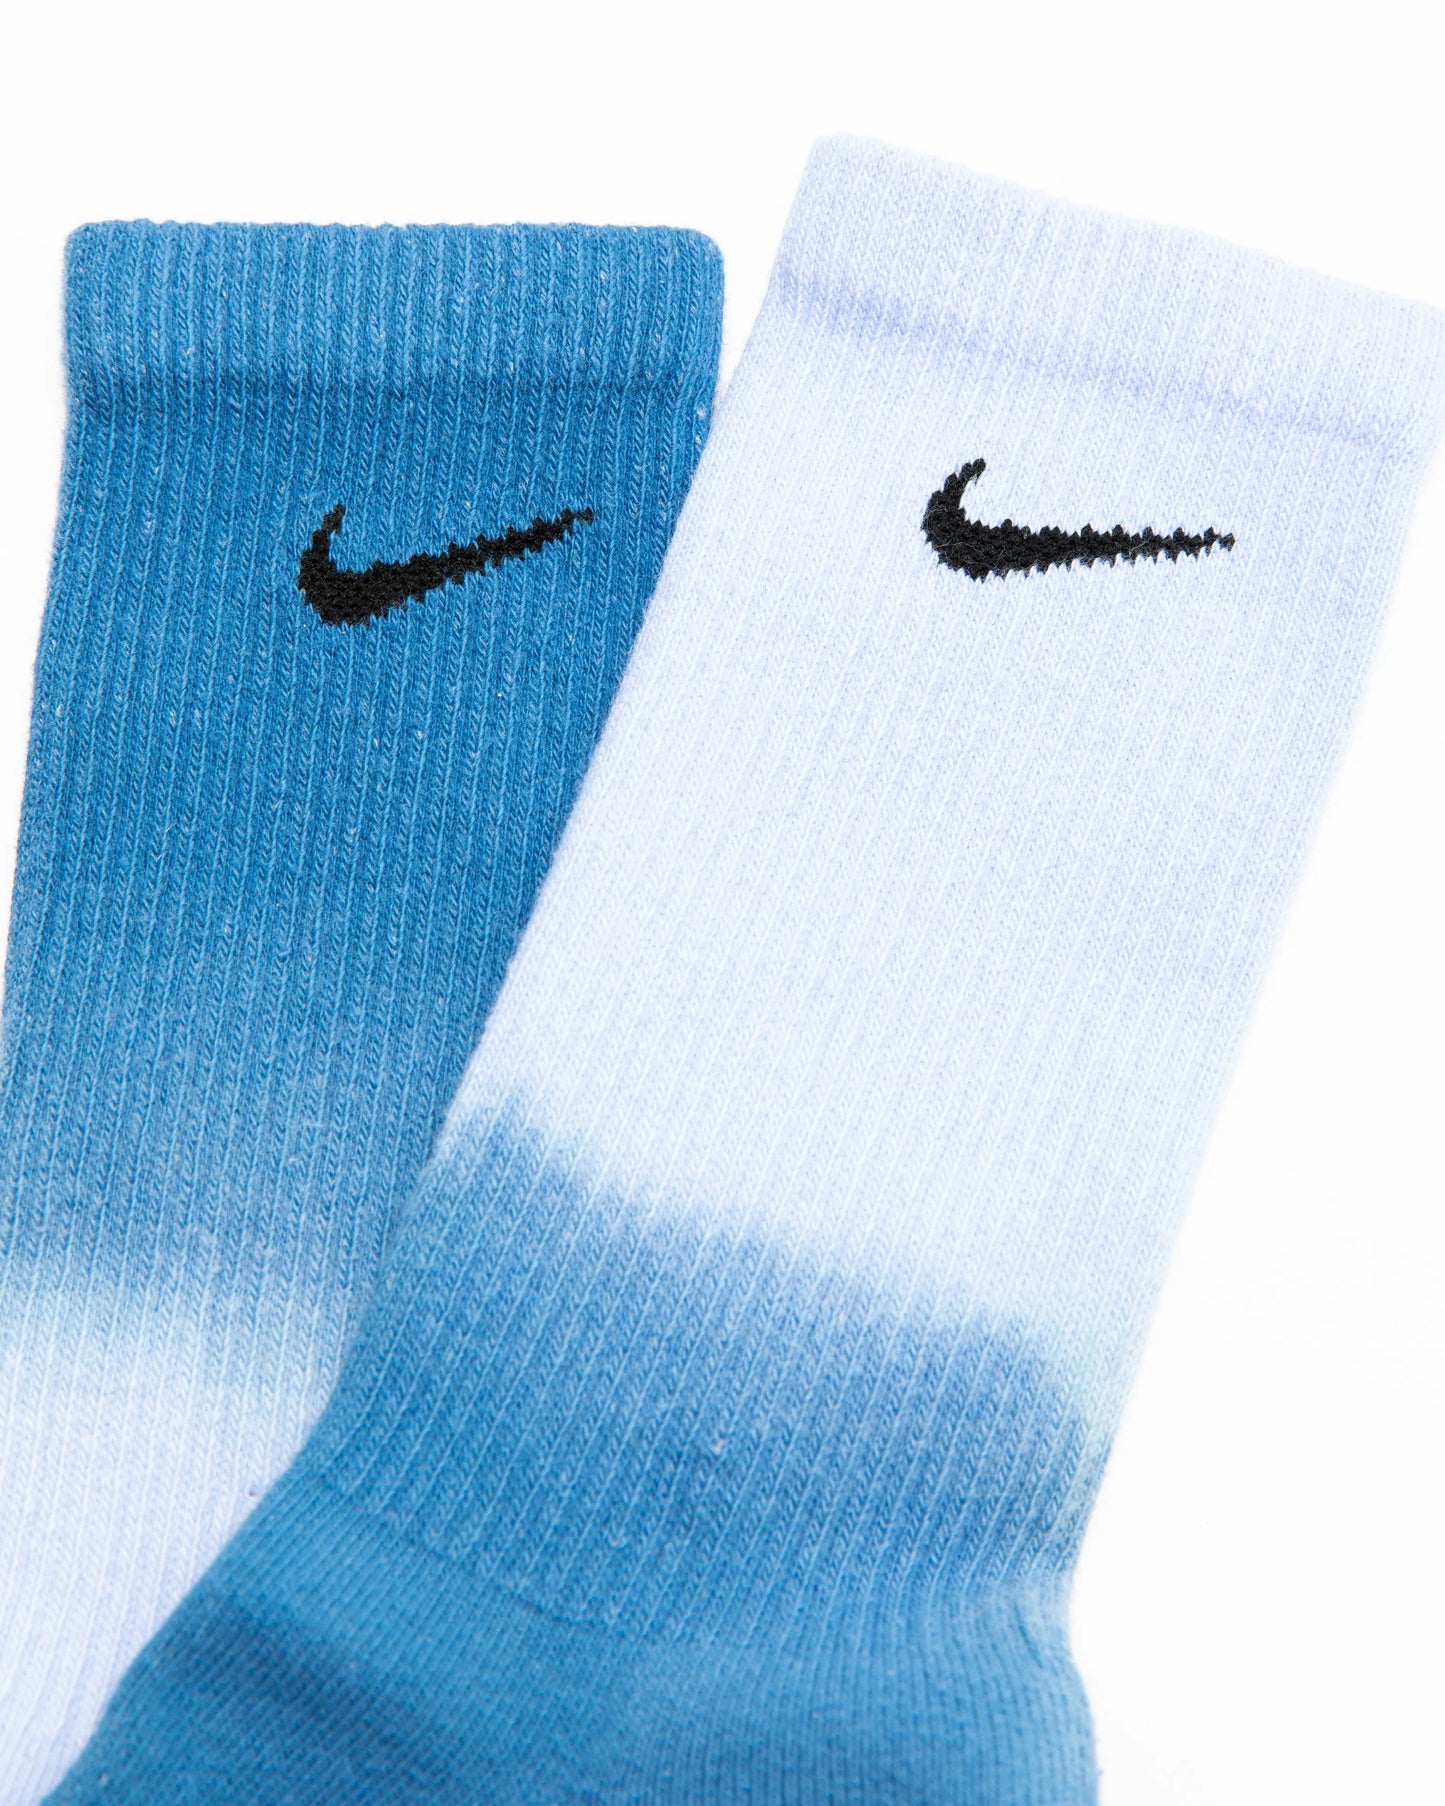 Nike Everyday Crew Socks